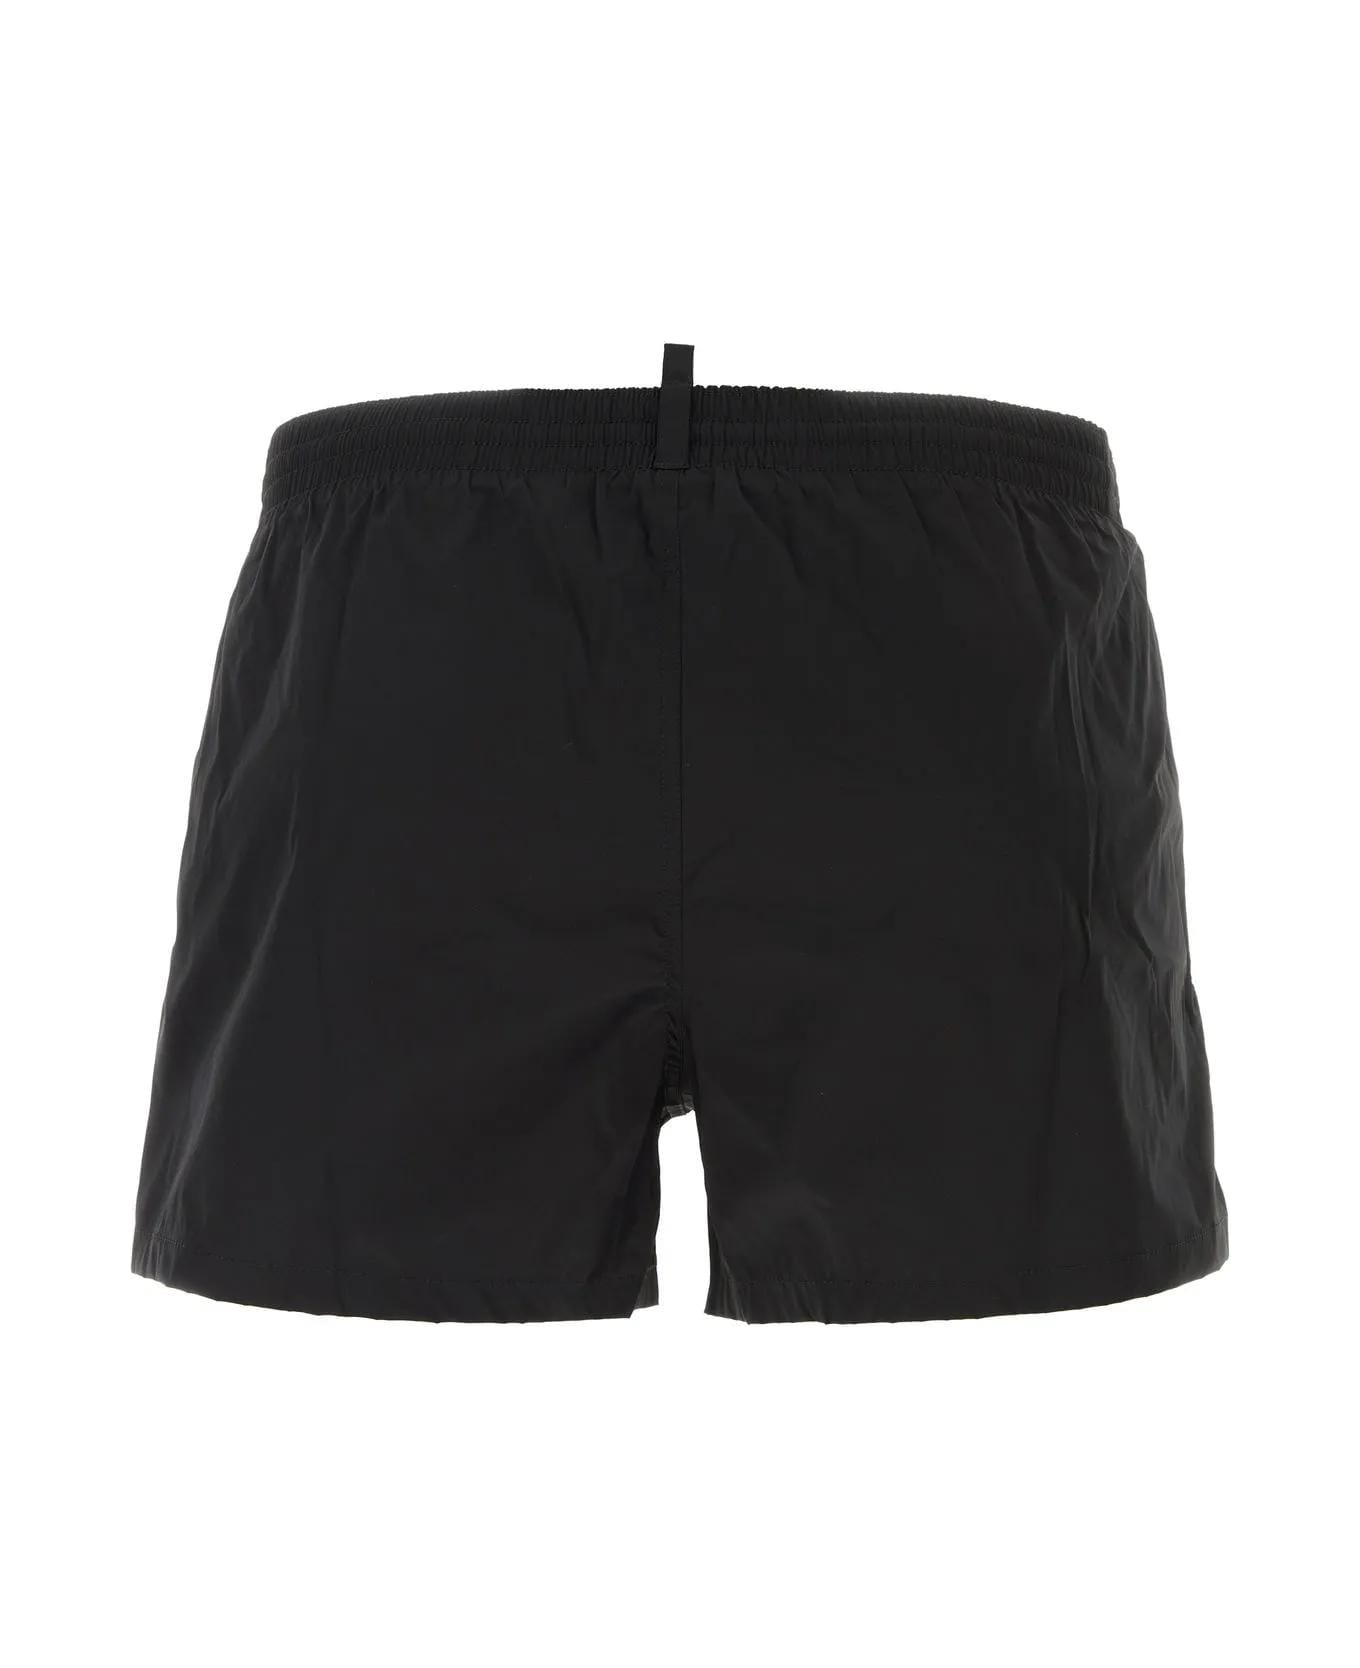 Dsquared2 Black Stretch Nylon Swimming Shorts - Black/red